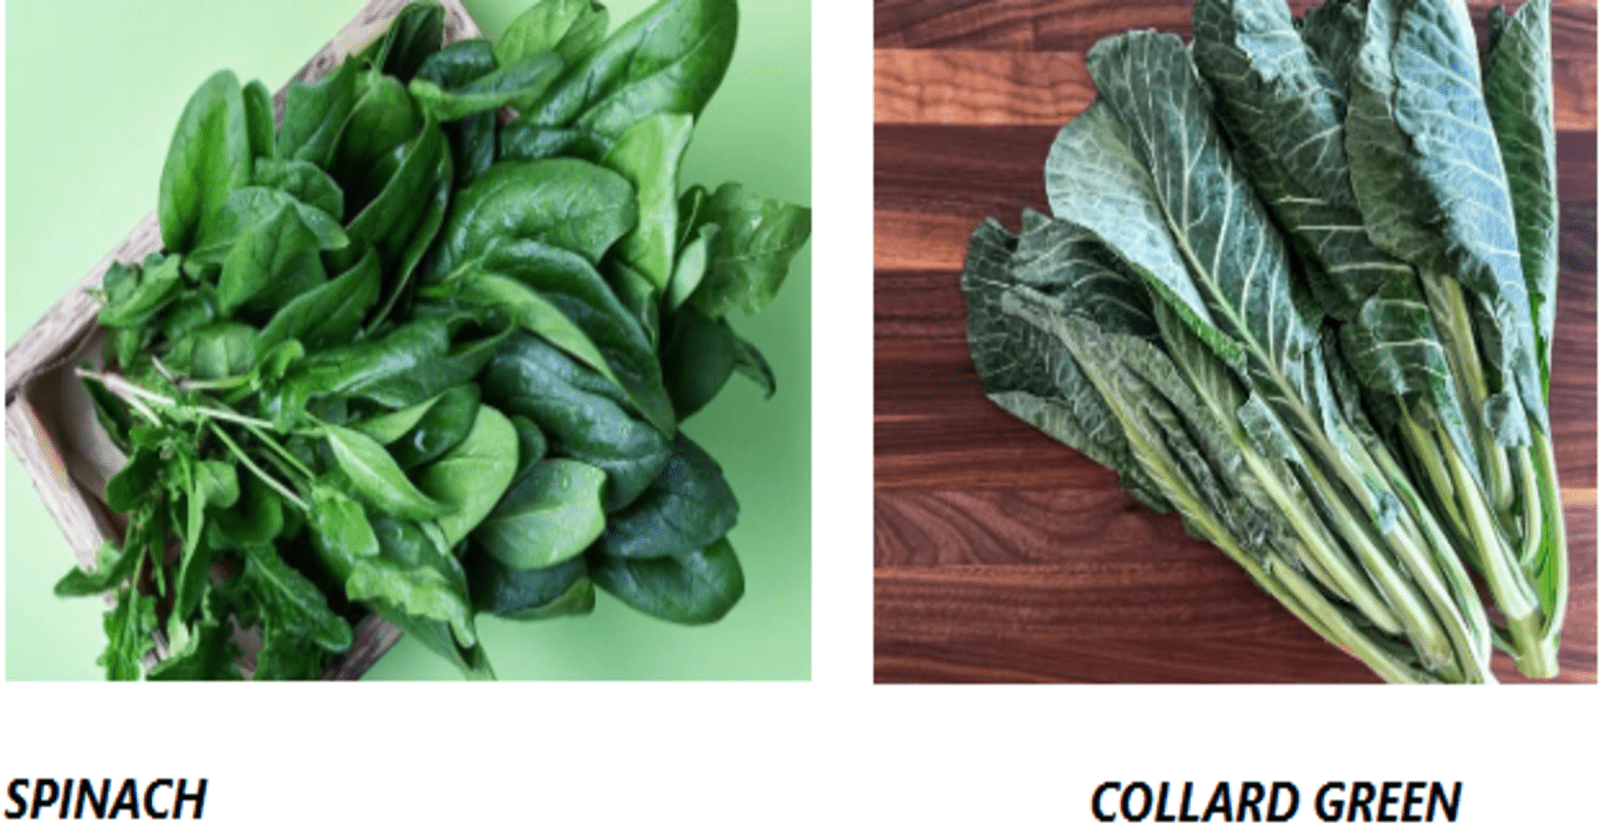 Spinach vs Collard greens